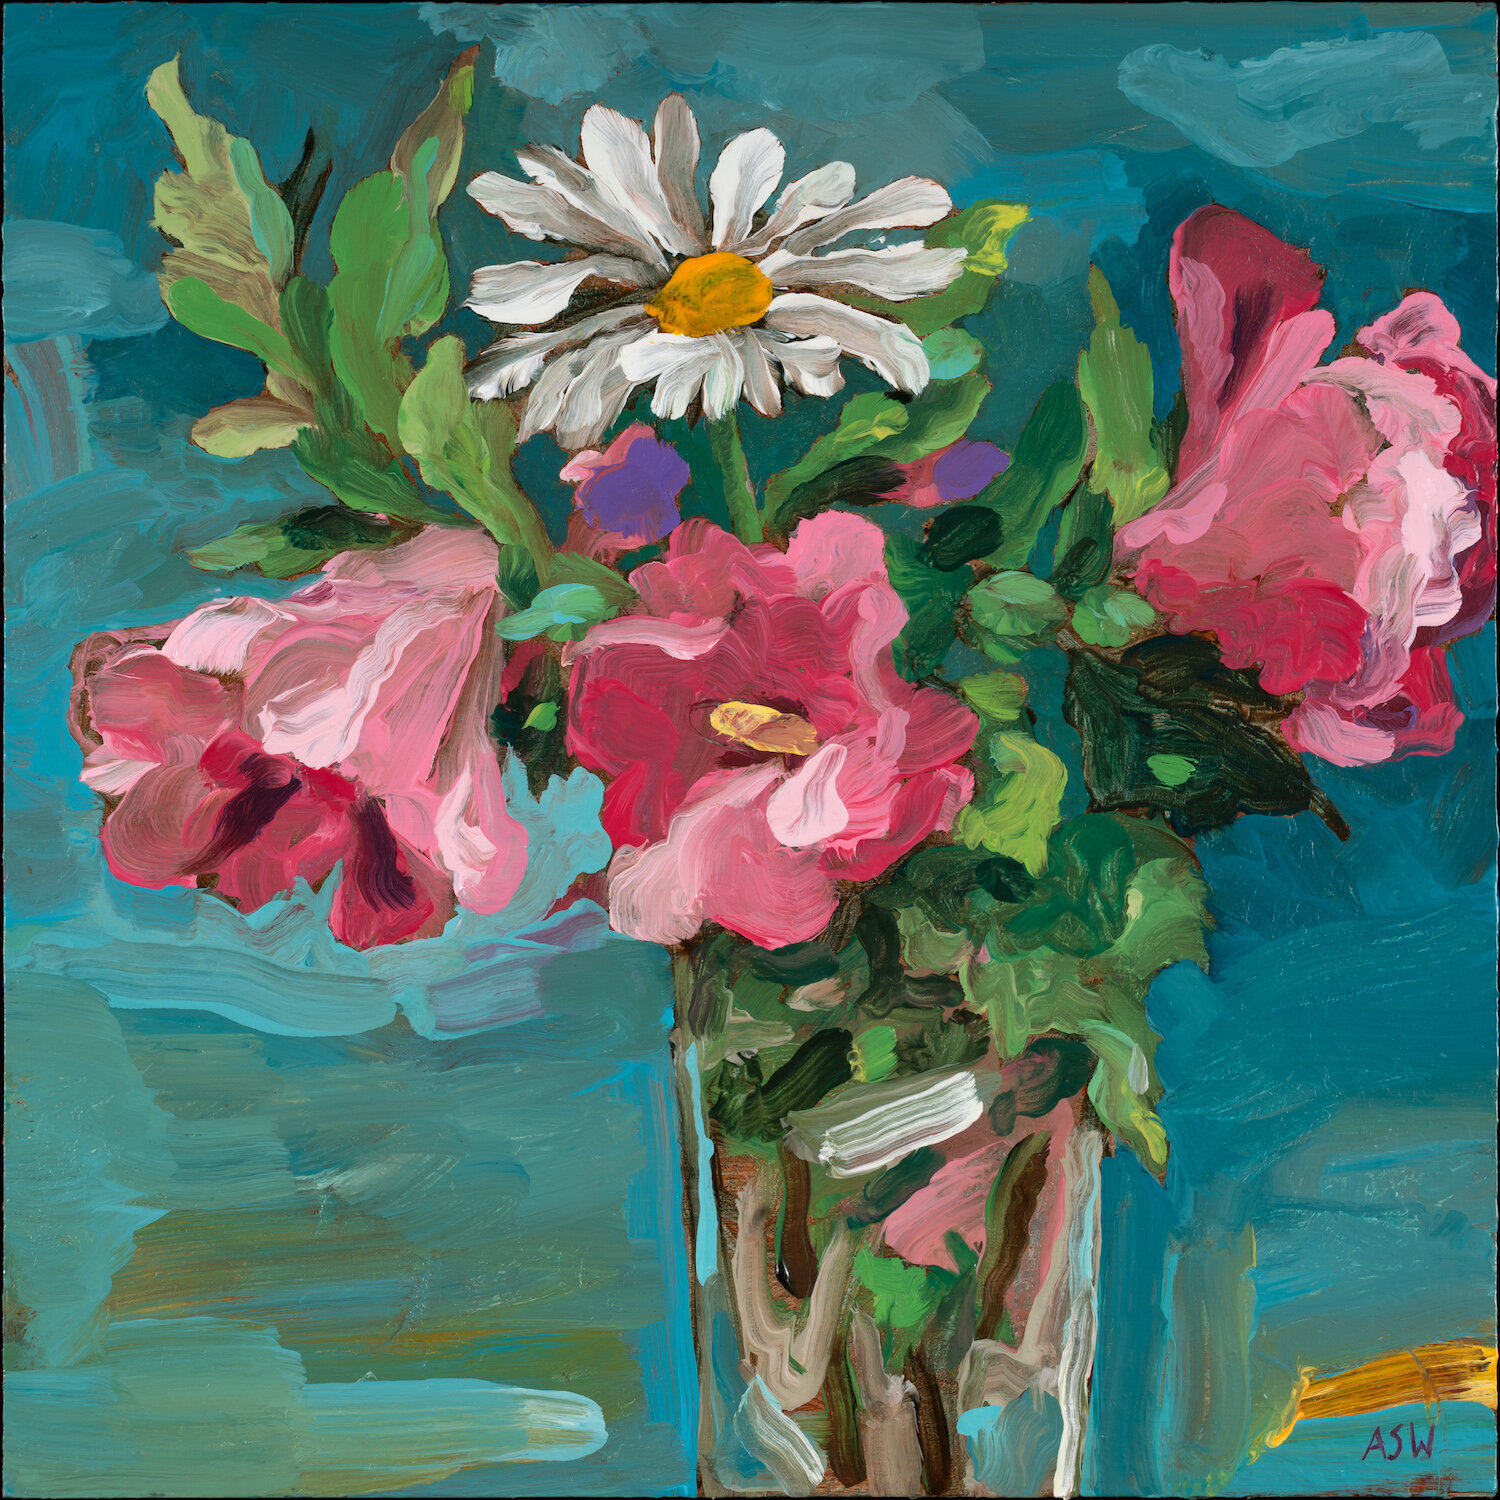 "Summer Flowers" by Anne Sargent Walker